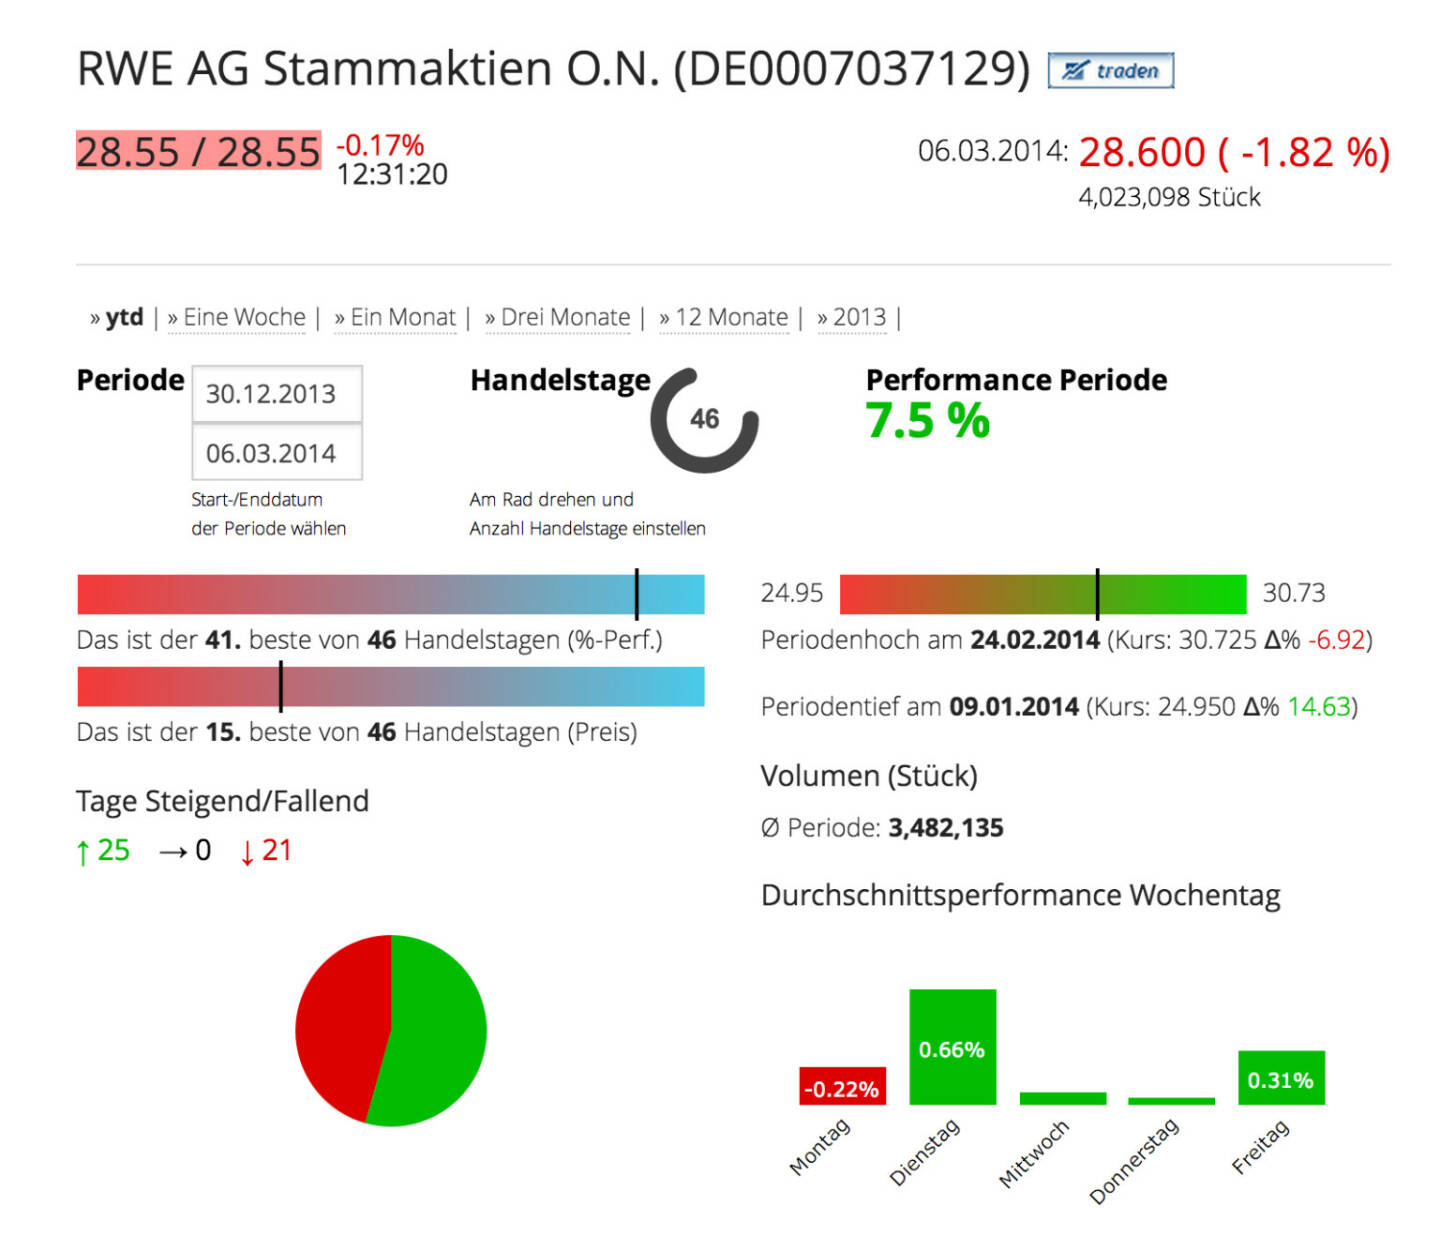 DIe RWE AG im Börse Social Network, http://boerse-social.com/launch/aktie/rwe_ag_stammaktien_on